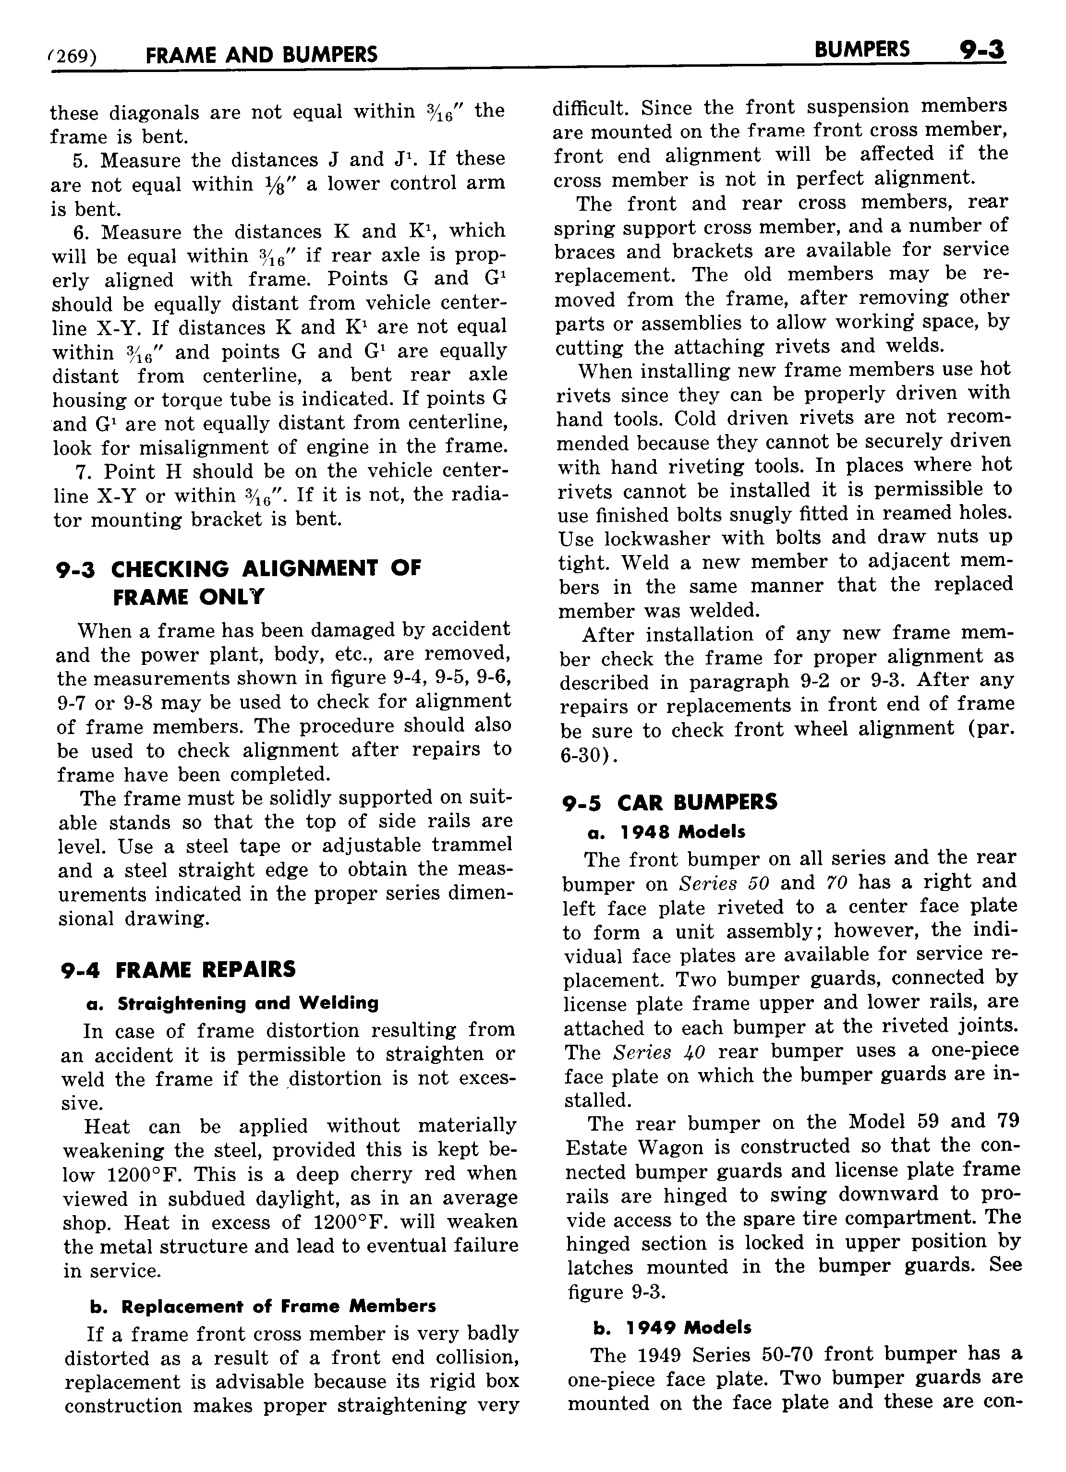 n_10 1948 Buick Shop Manual - Frame & Bumpers-003-003.jpg